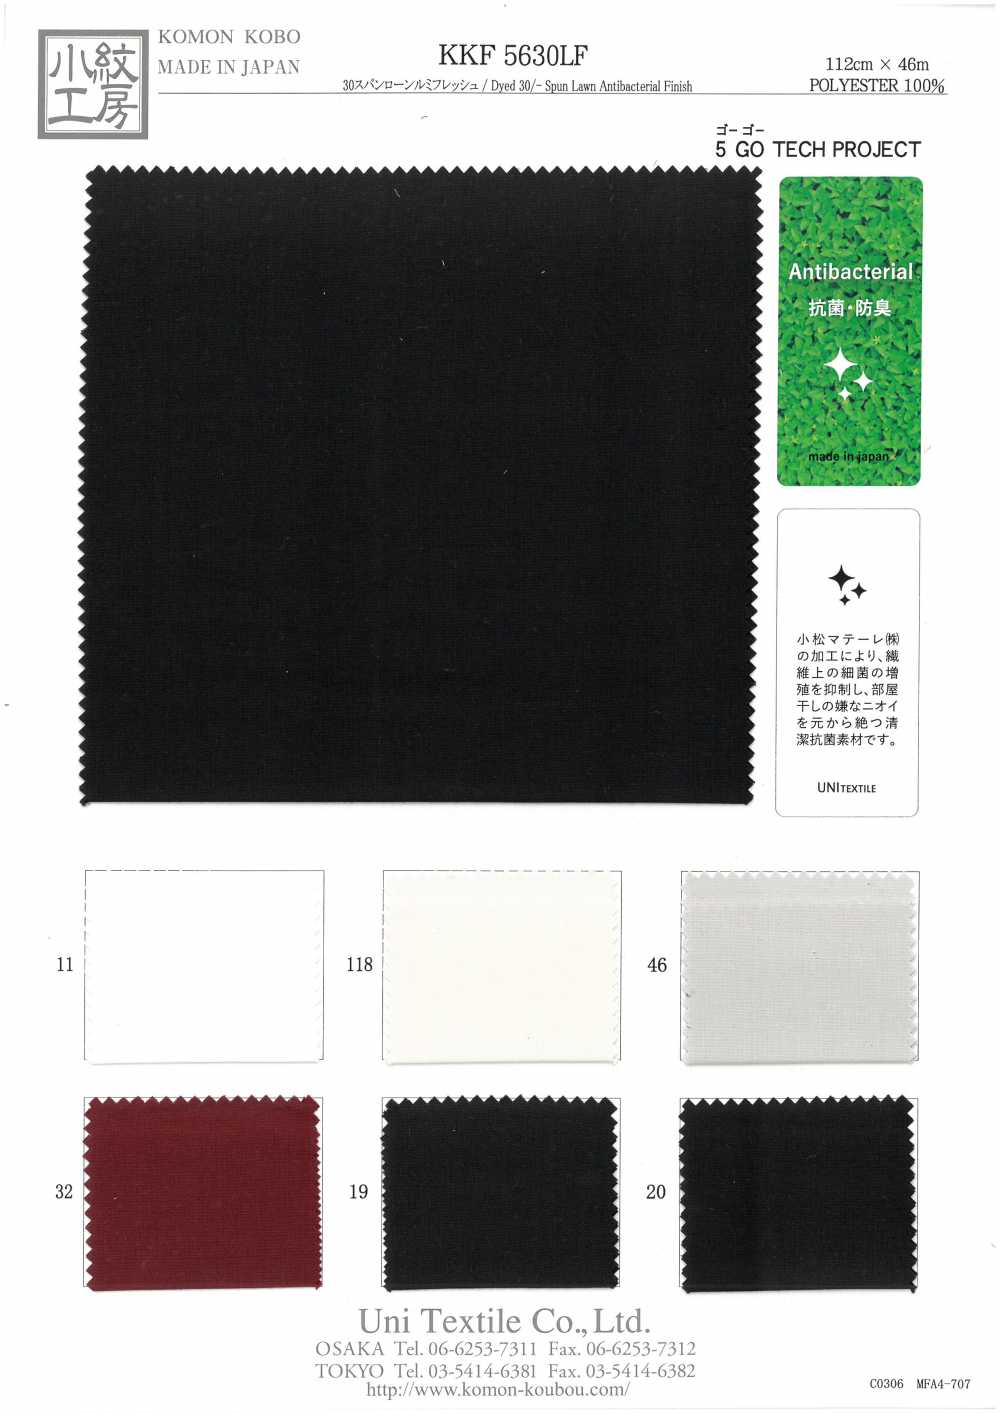 KKF5630LF 30 Césped Hilado Lumi Fresh[Fabrica Textil] Uni Textile